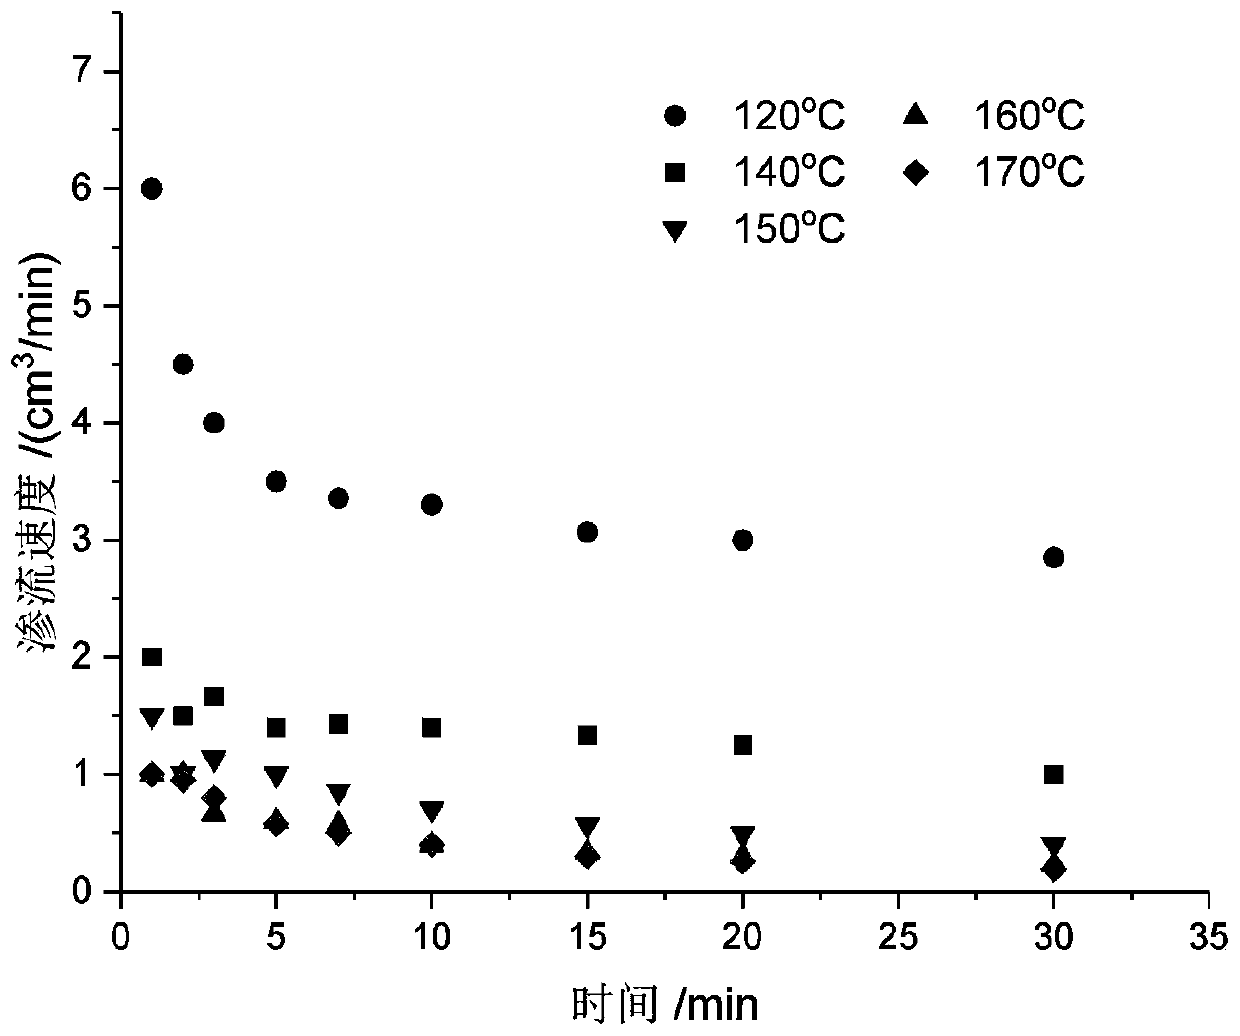 High-temperature heat-response bentonite and high-temperature heat-response bentonite drilling fluid